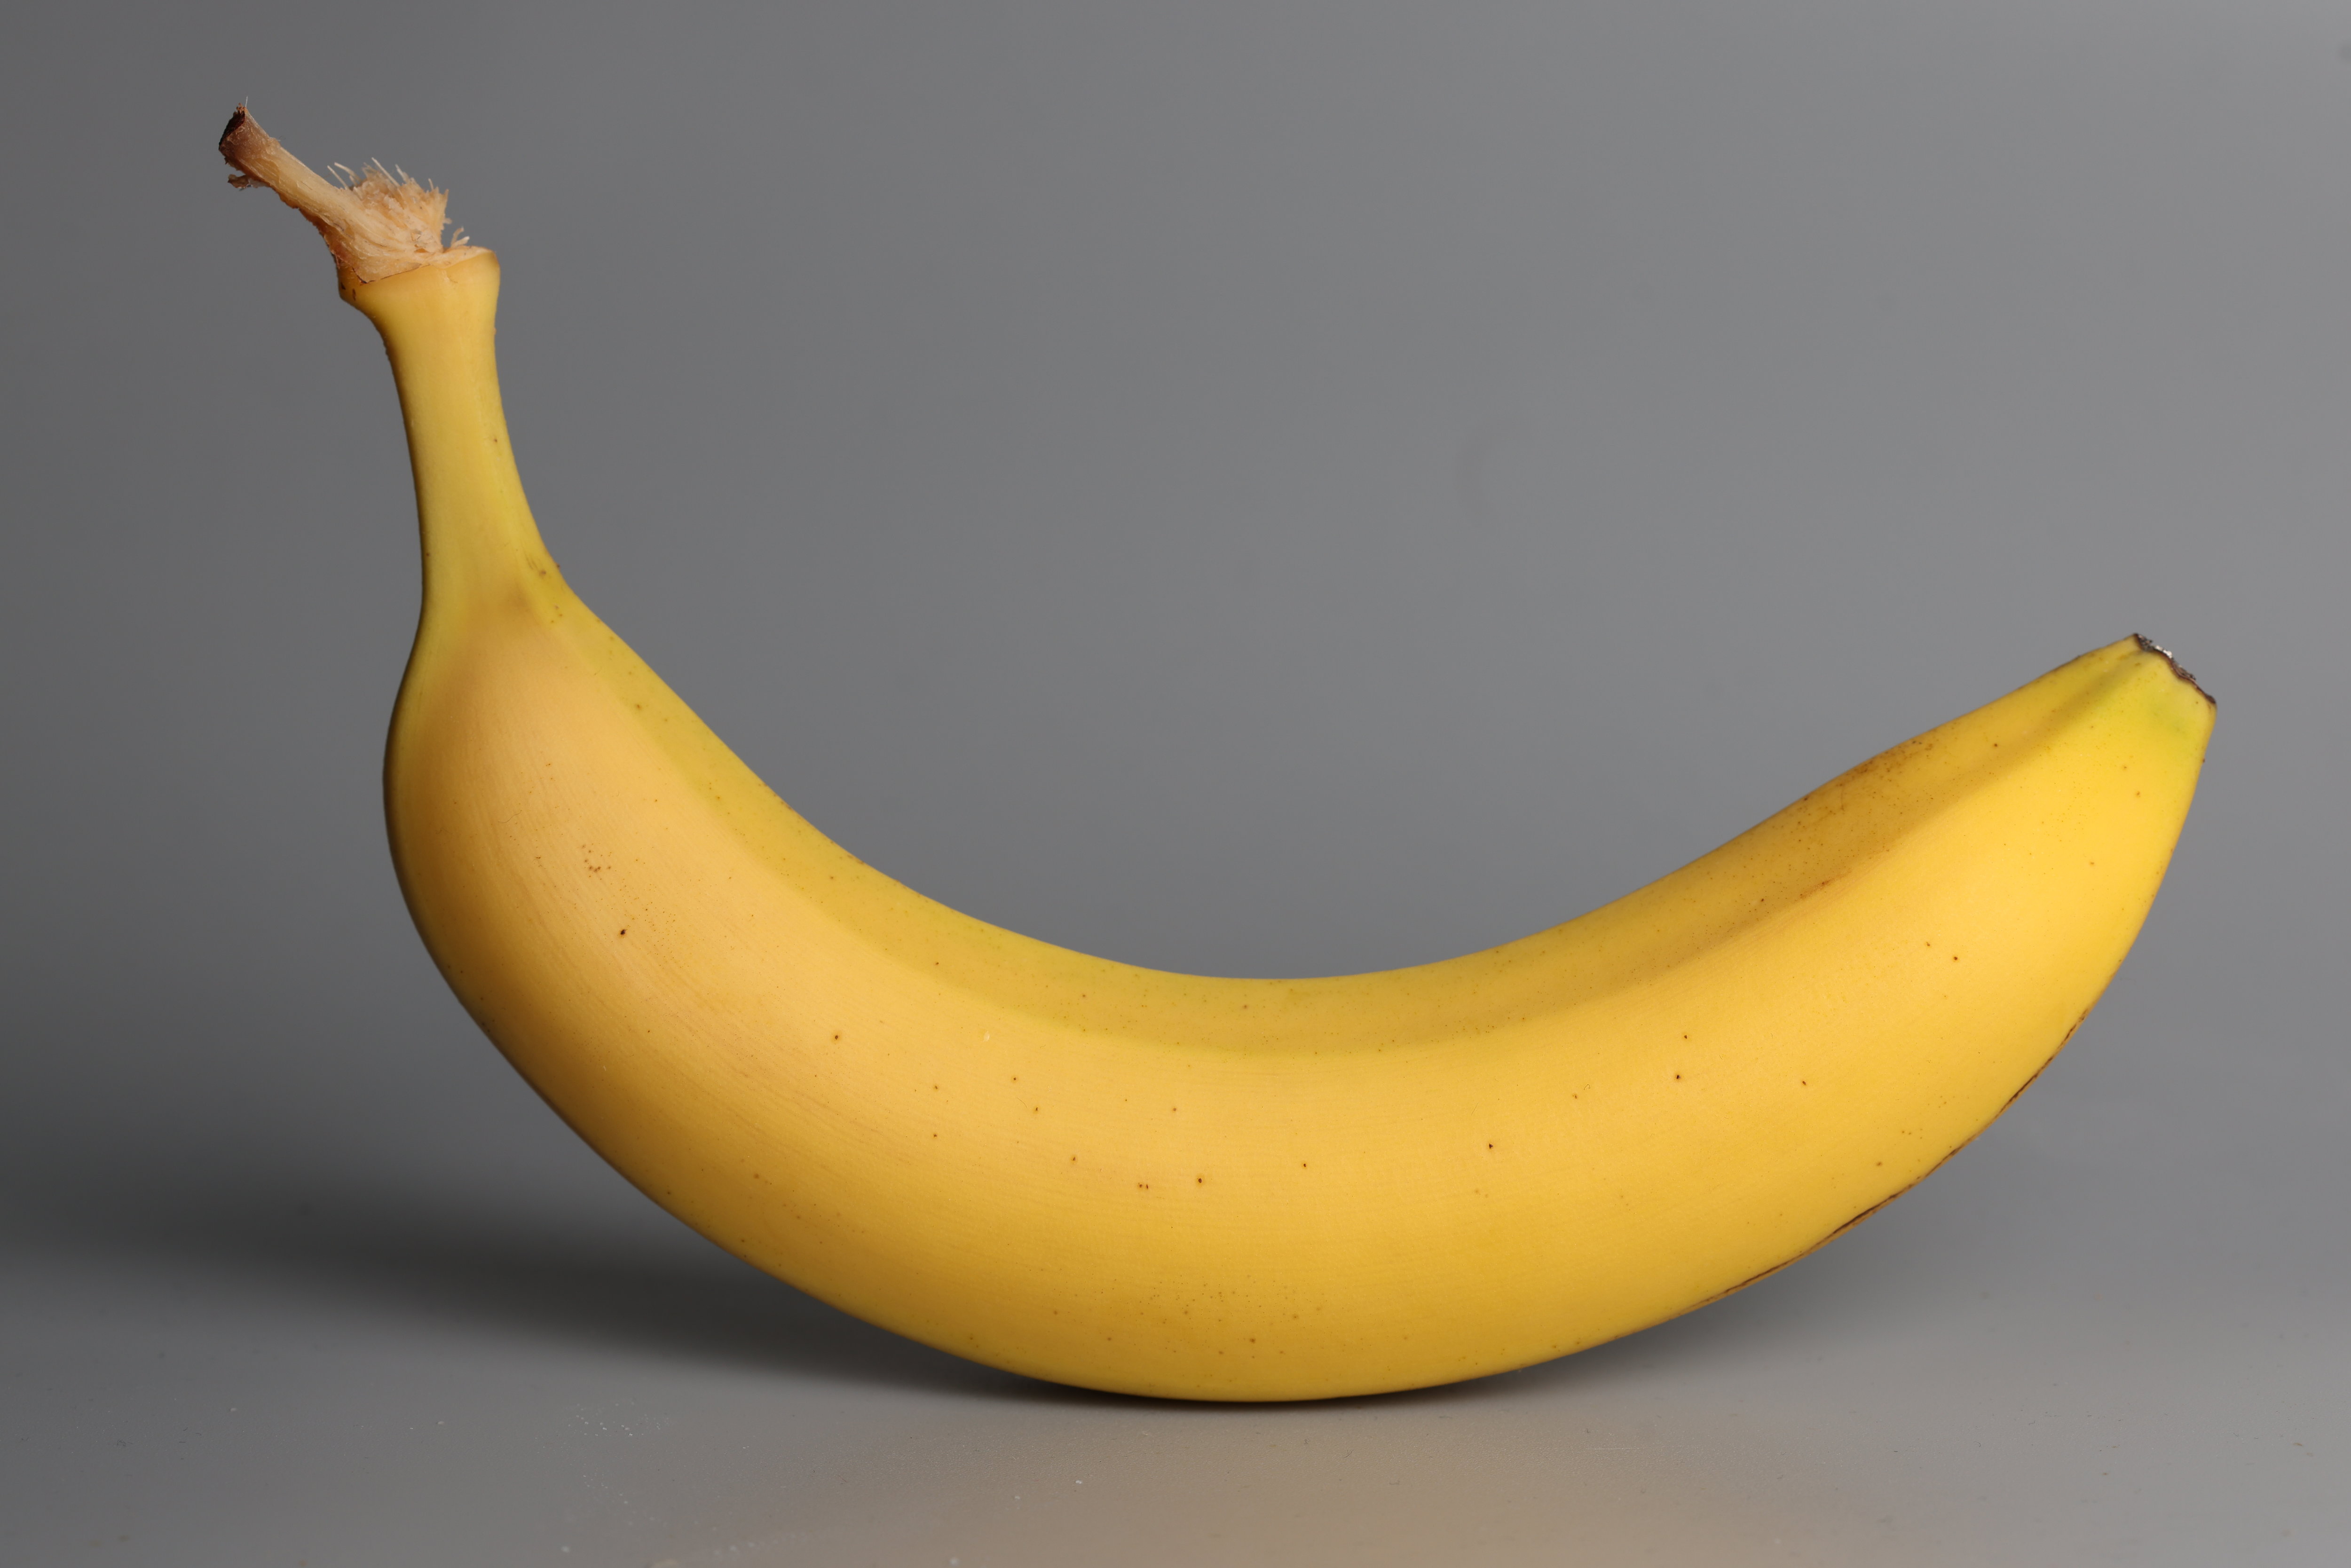 La banane Cavendish va-t-elle disparaître ? LP / Arnaud Journois